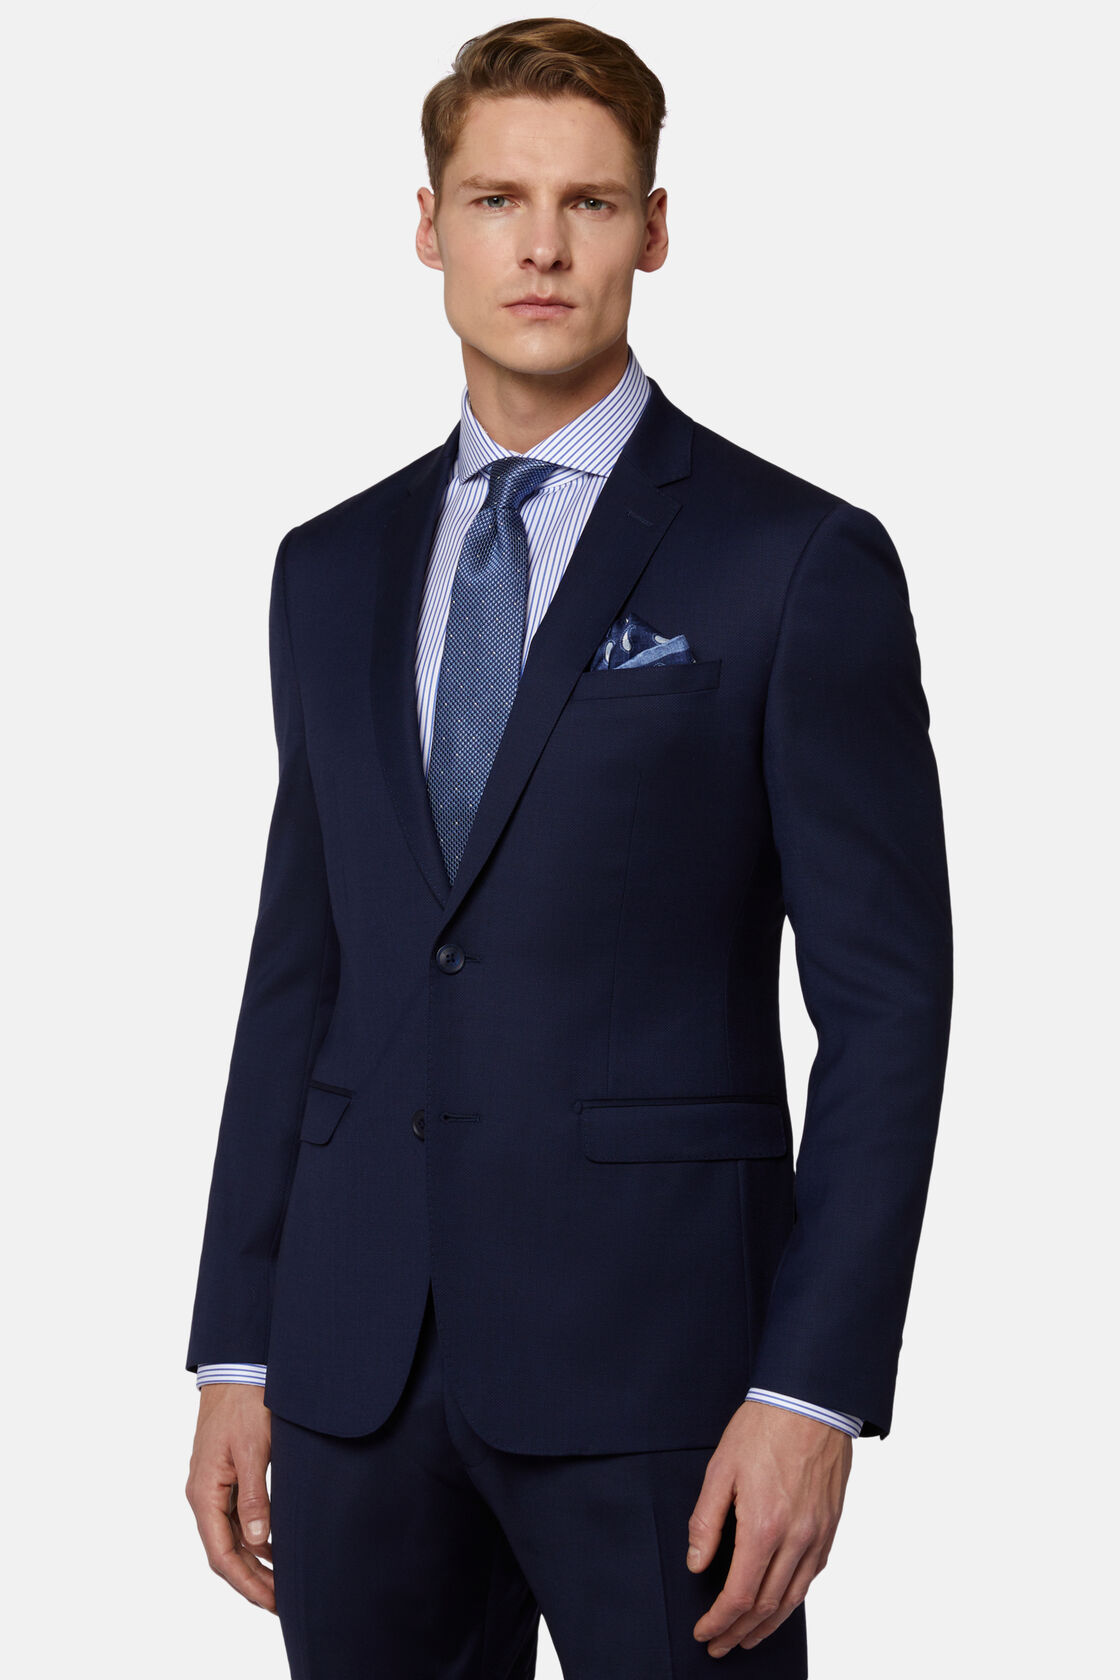 Marineblauw diagonaal pak van stretchwol, Navy blue, hi-res